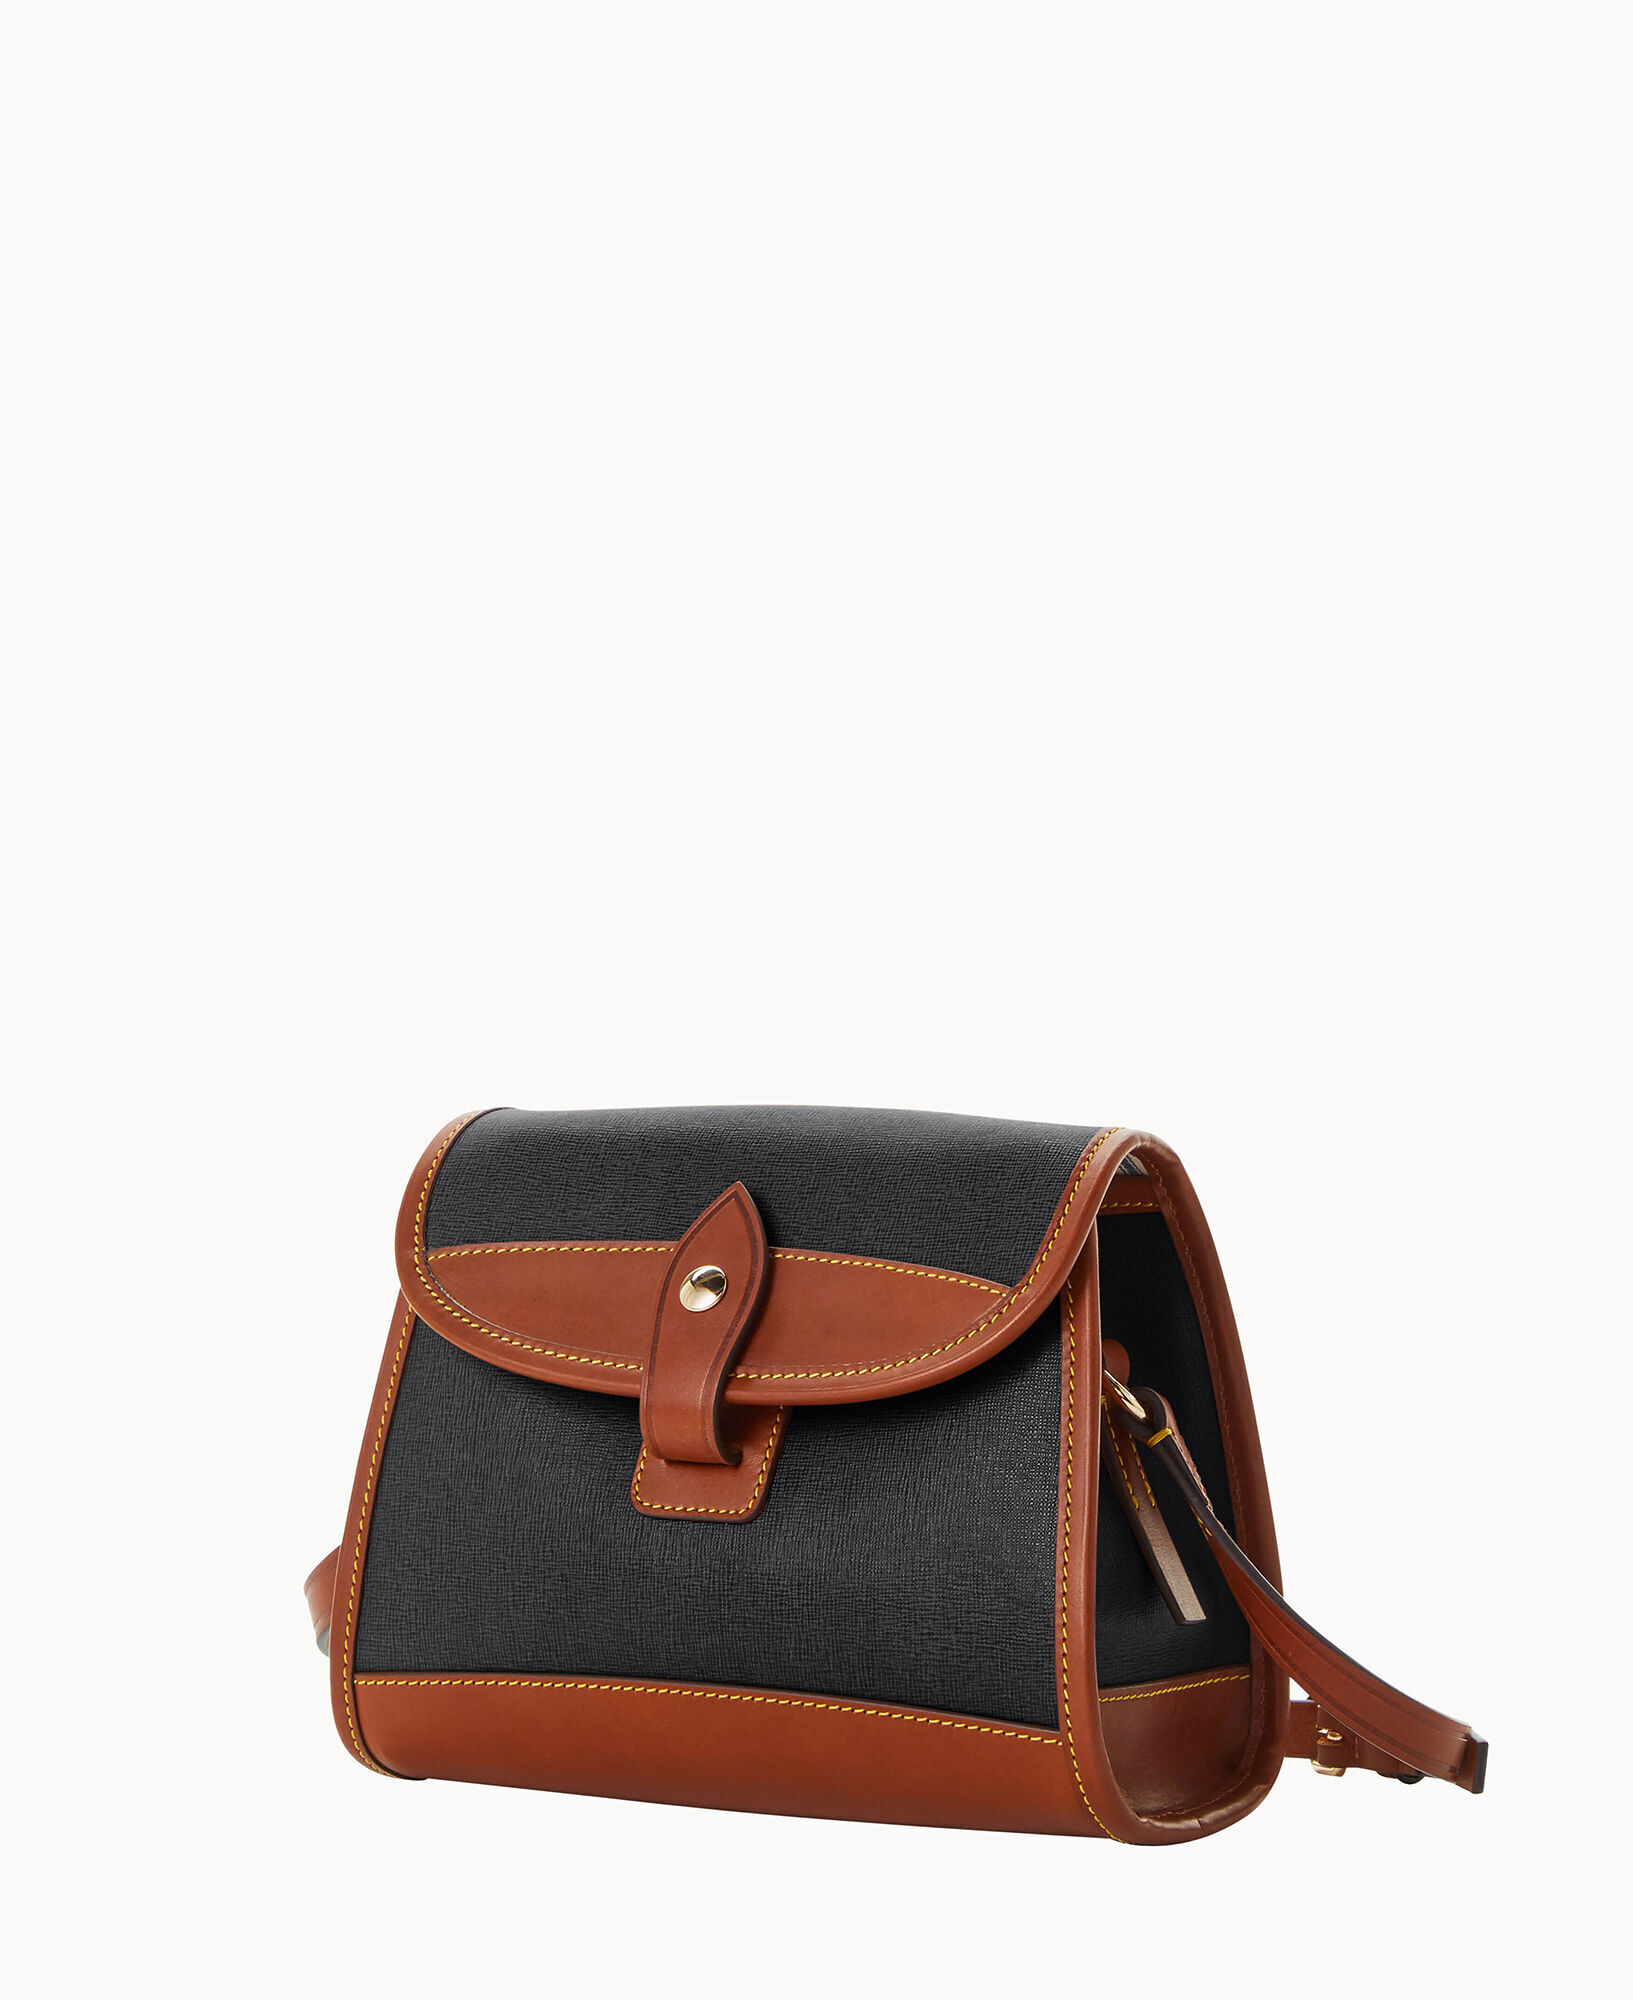 Dooney & Bourke Saffiano Leather Flap Crossbodybag